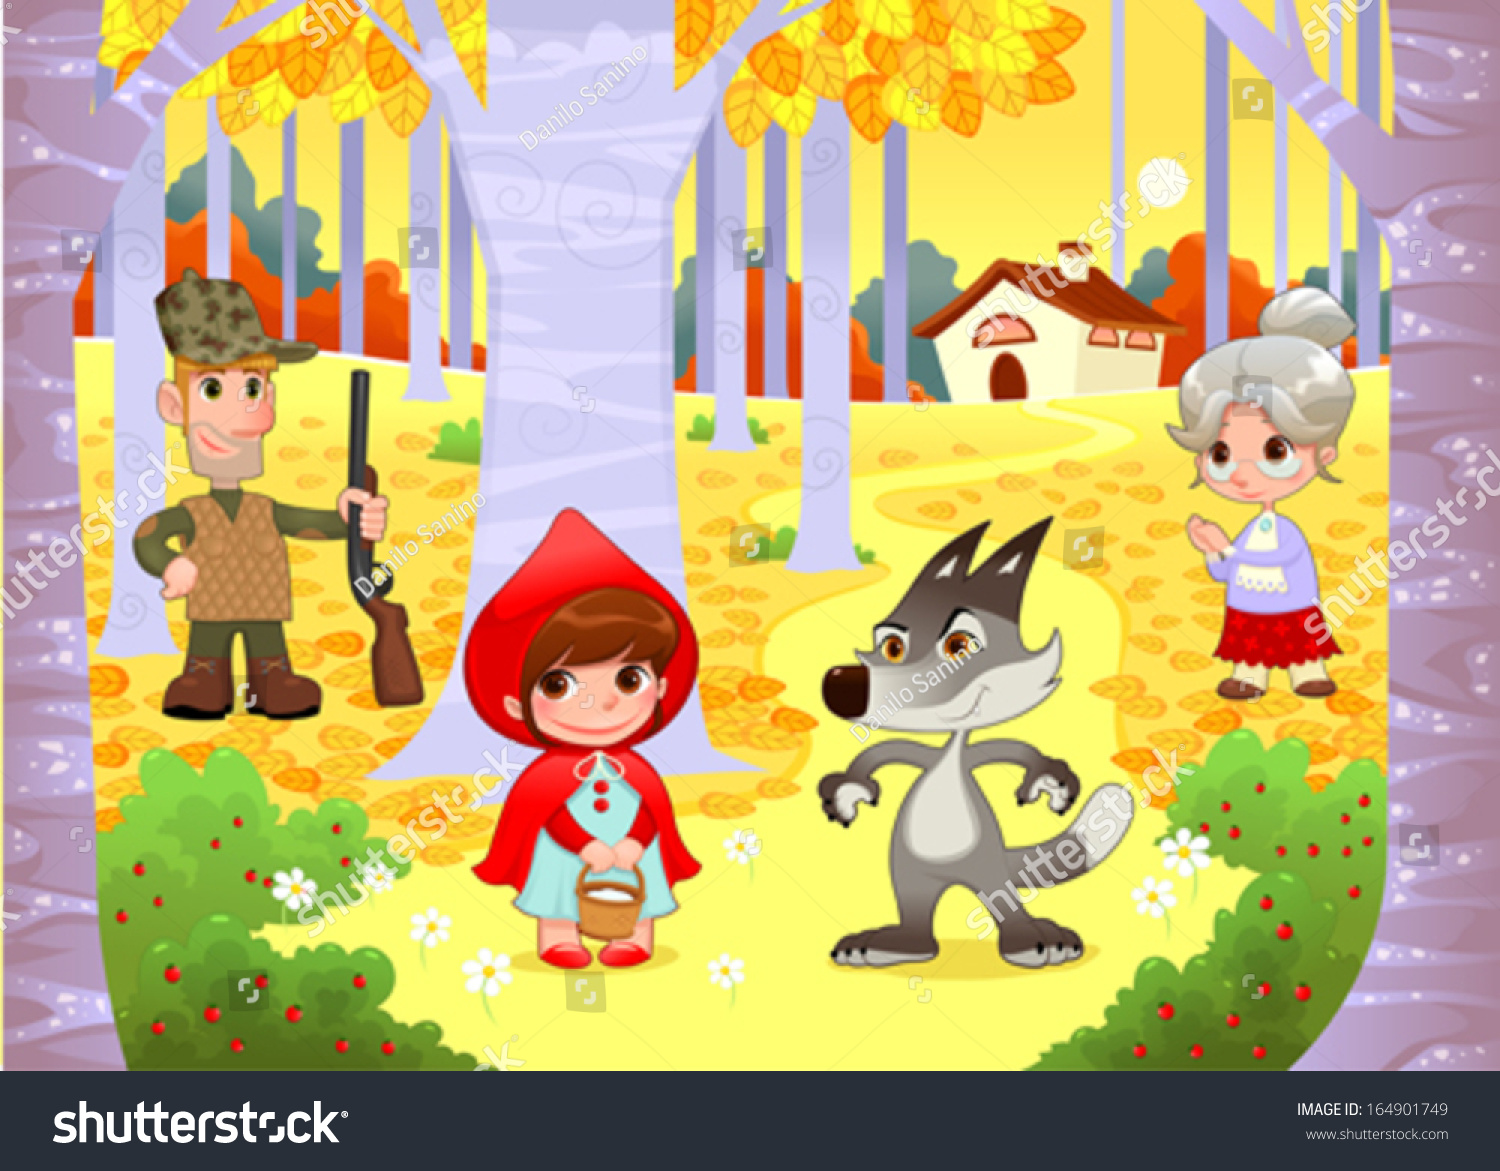 Little Red Hiding Hood Scene. Funny Cartoon And Vector Illustration